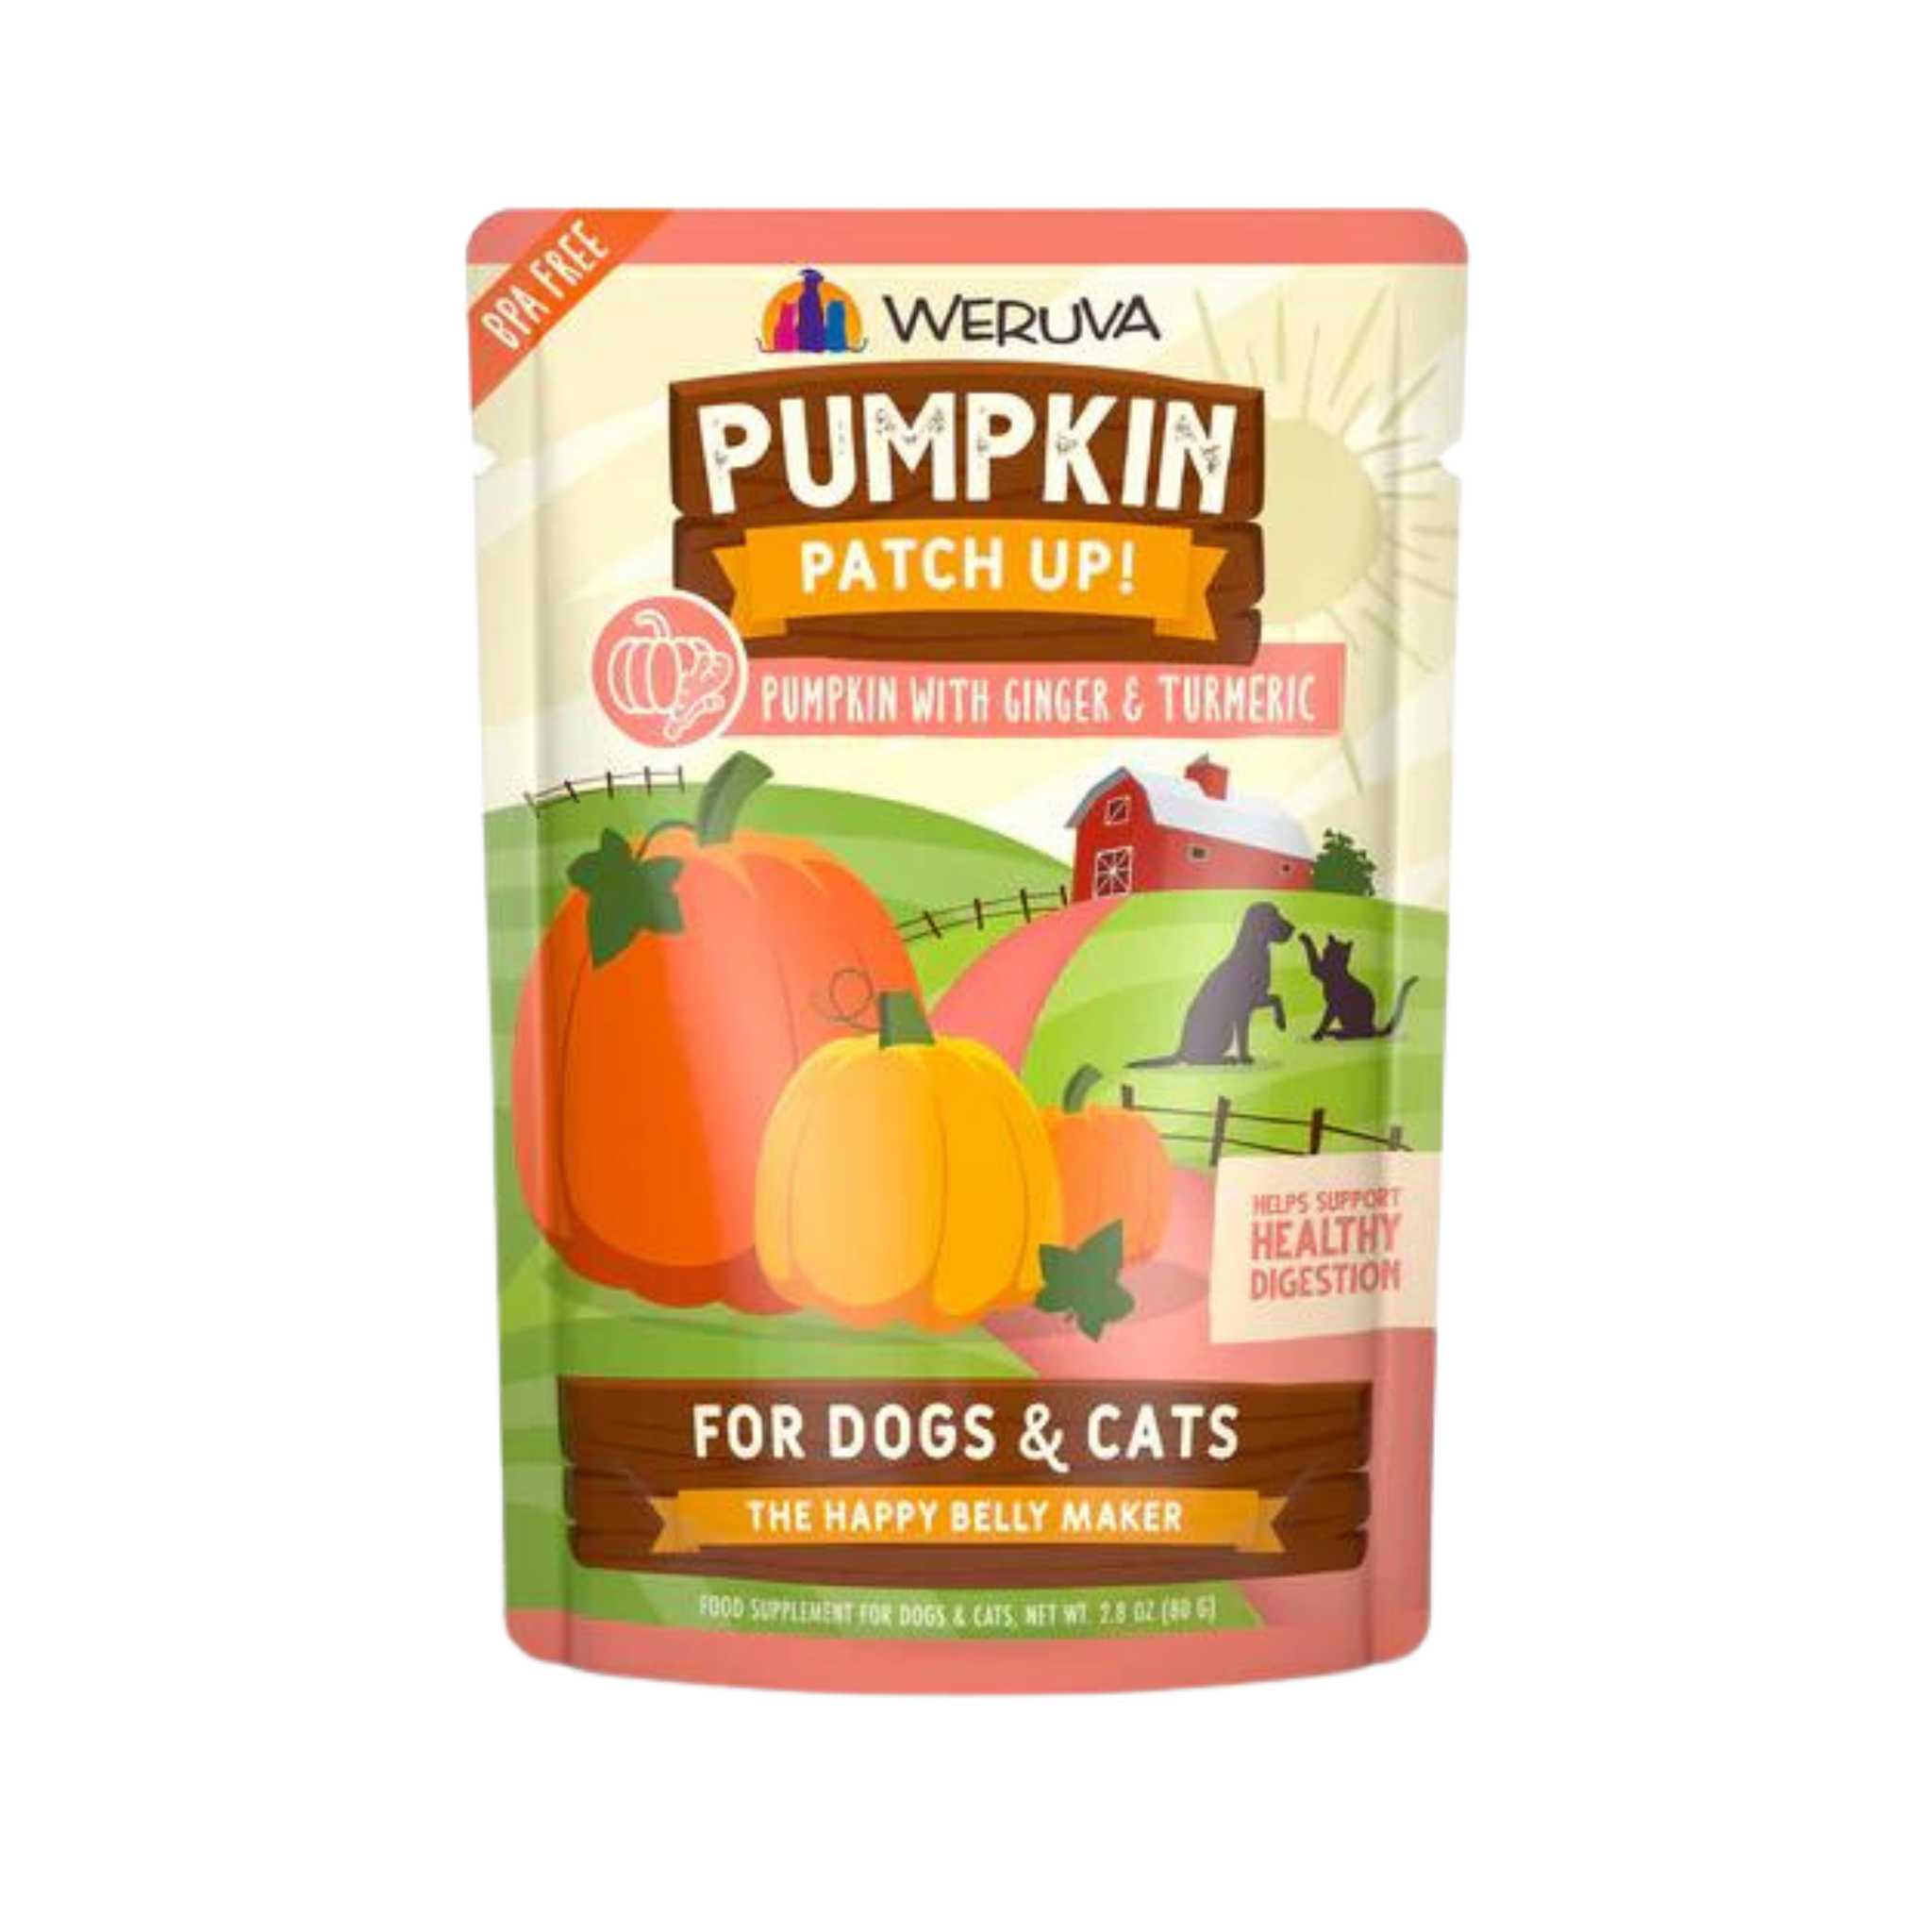 Weruva Pumpkin Patch Up Pumpkin, Ginger & Turmeric Happy Belly Maker For Dogs & Cats